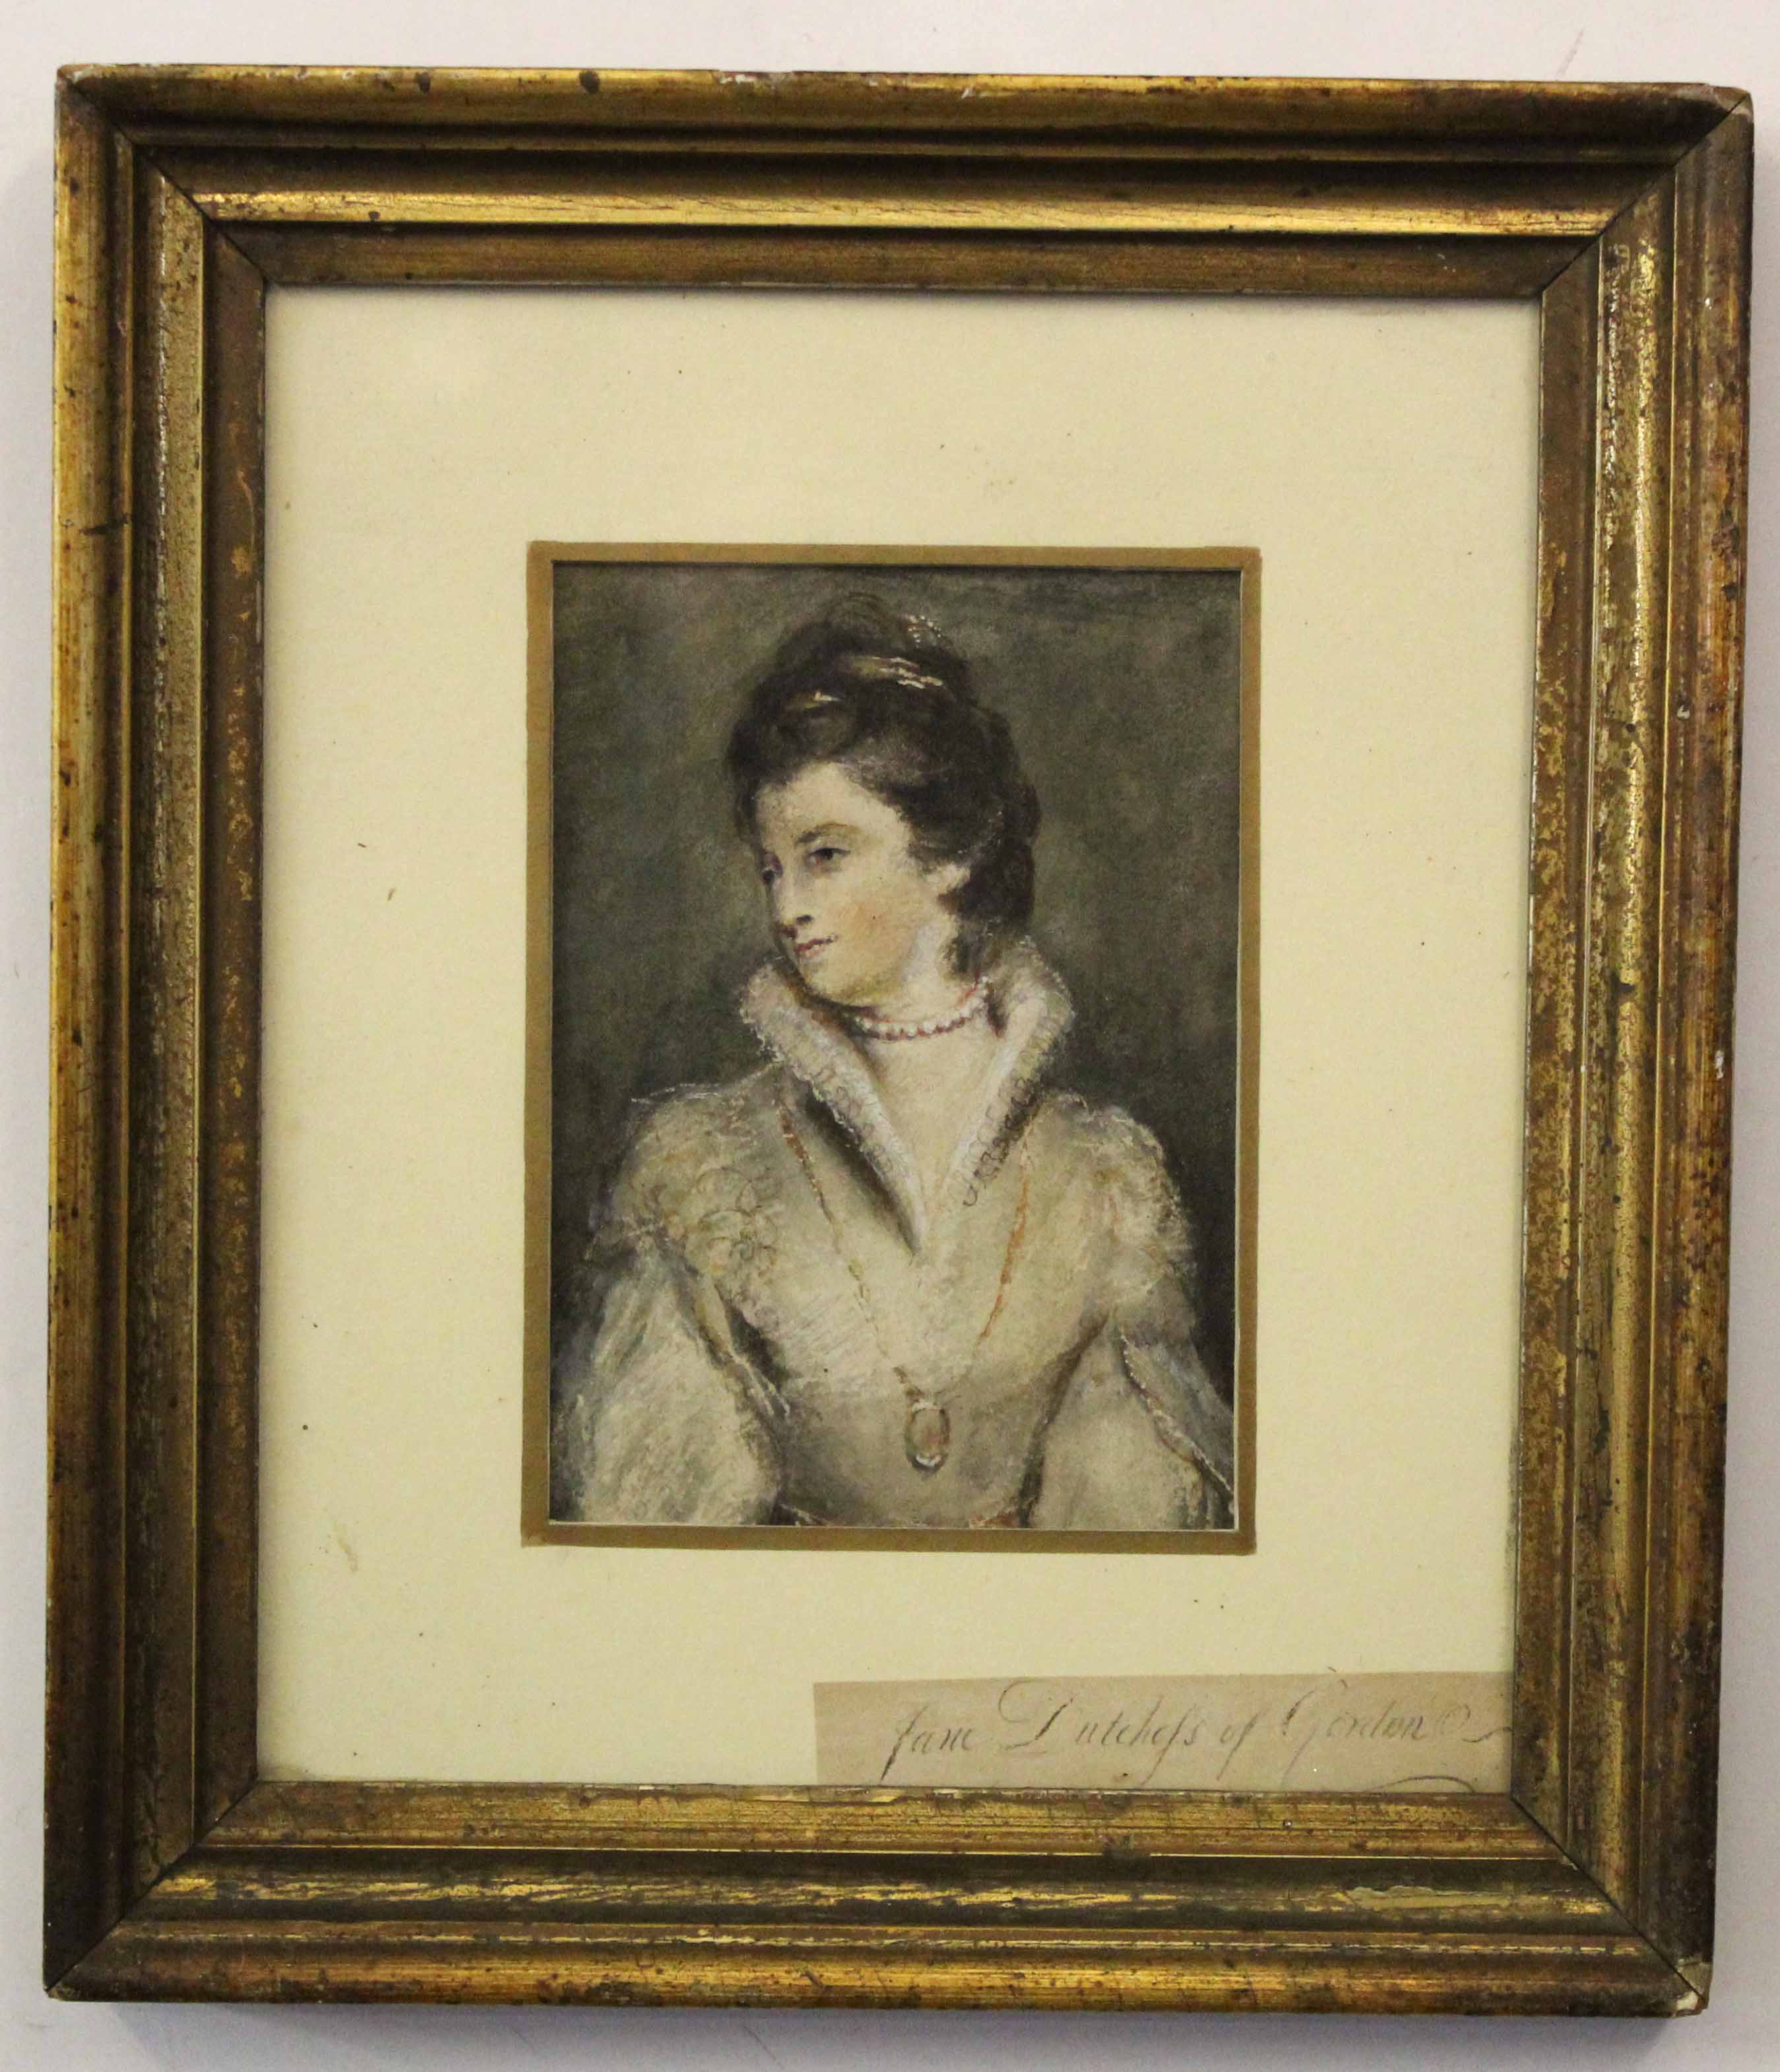 19th century English School watercolour, Jane, Duchess of Gordon, 14 x 10cm